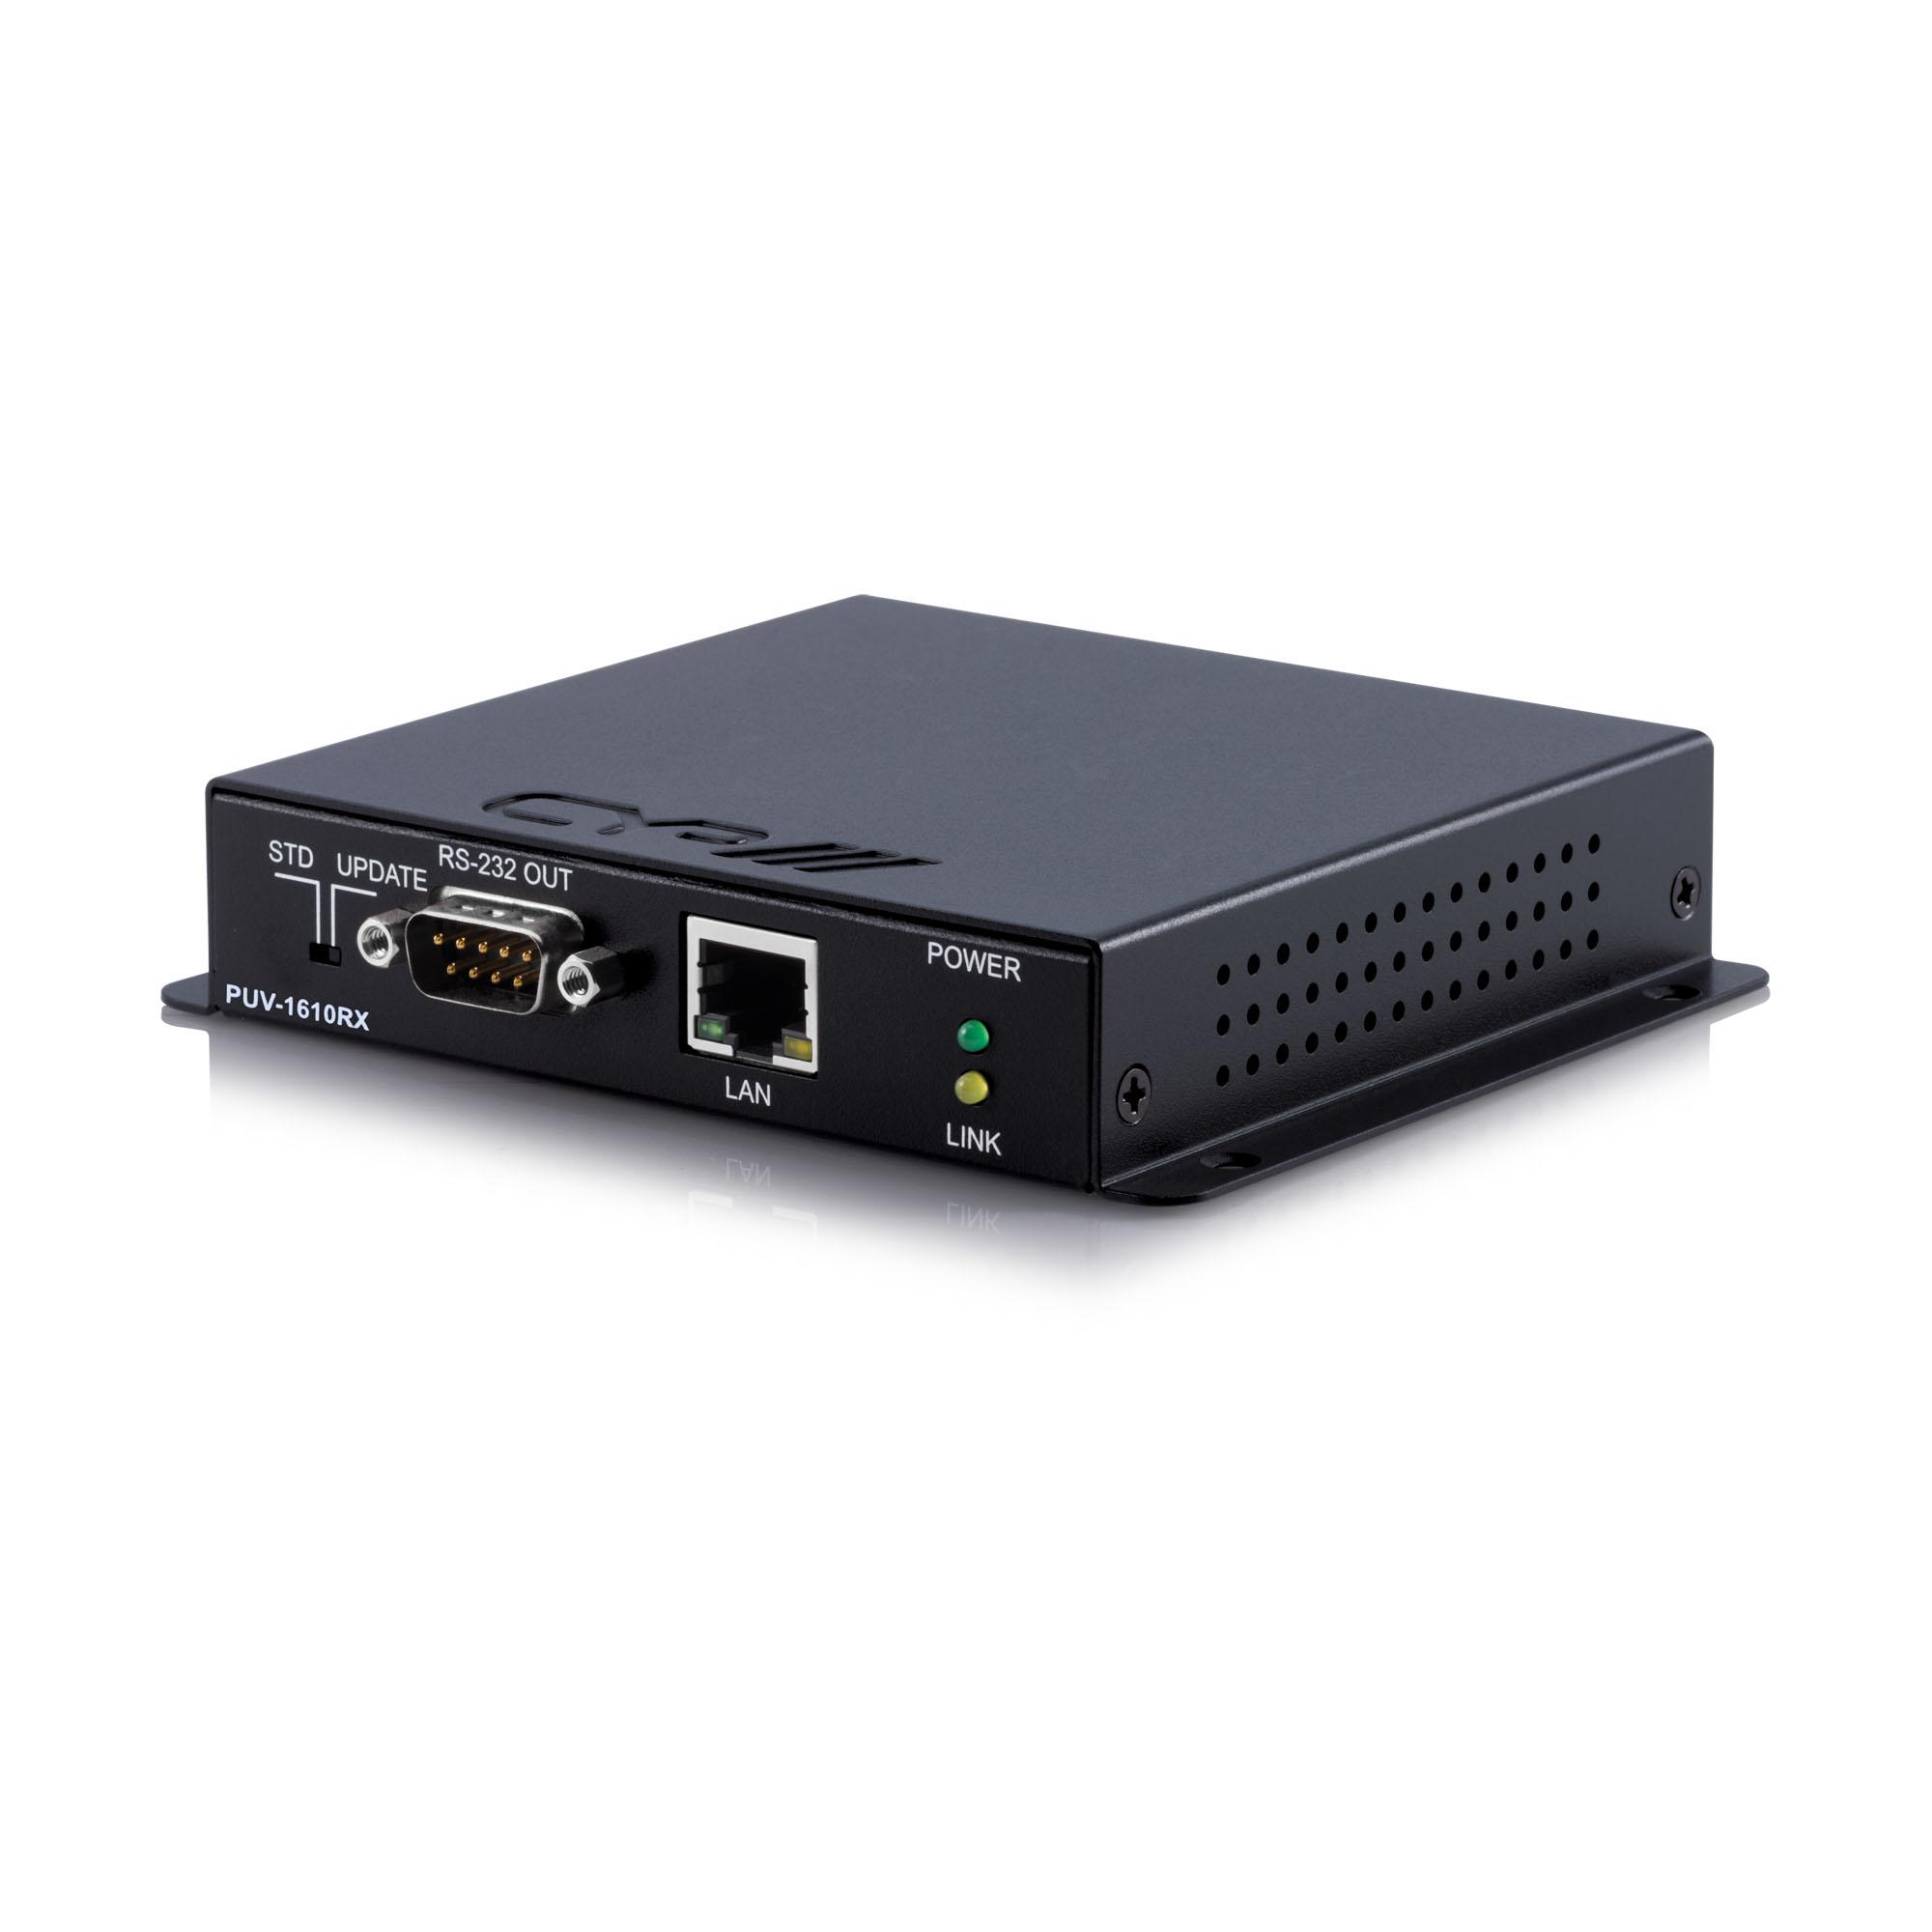 PUV-1610RX 5-Play HDBaseT™ Receiver (inc. PoH & single LAN, up to 100m) Power to TX